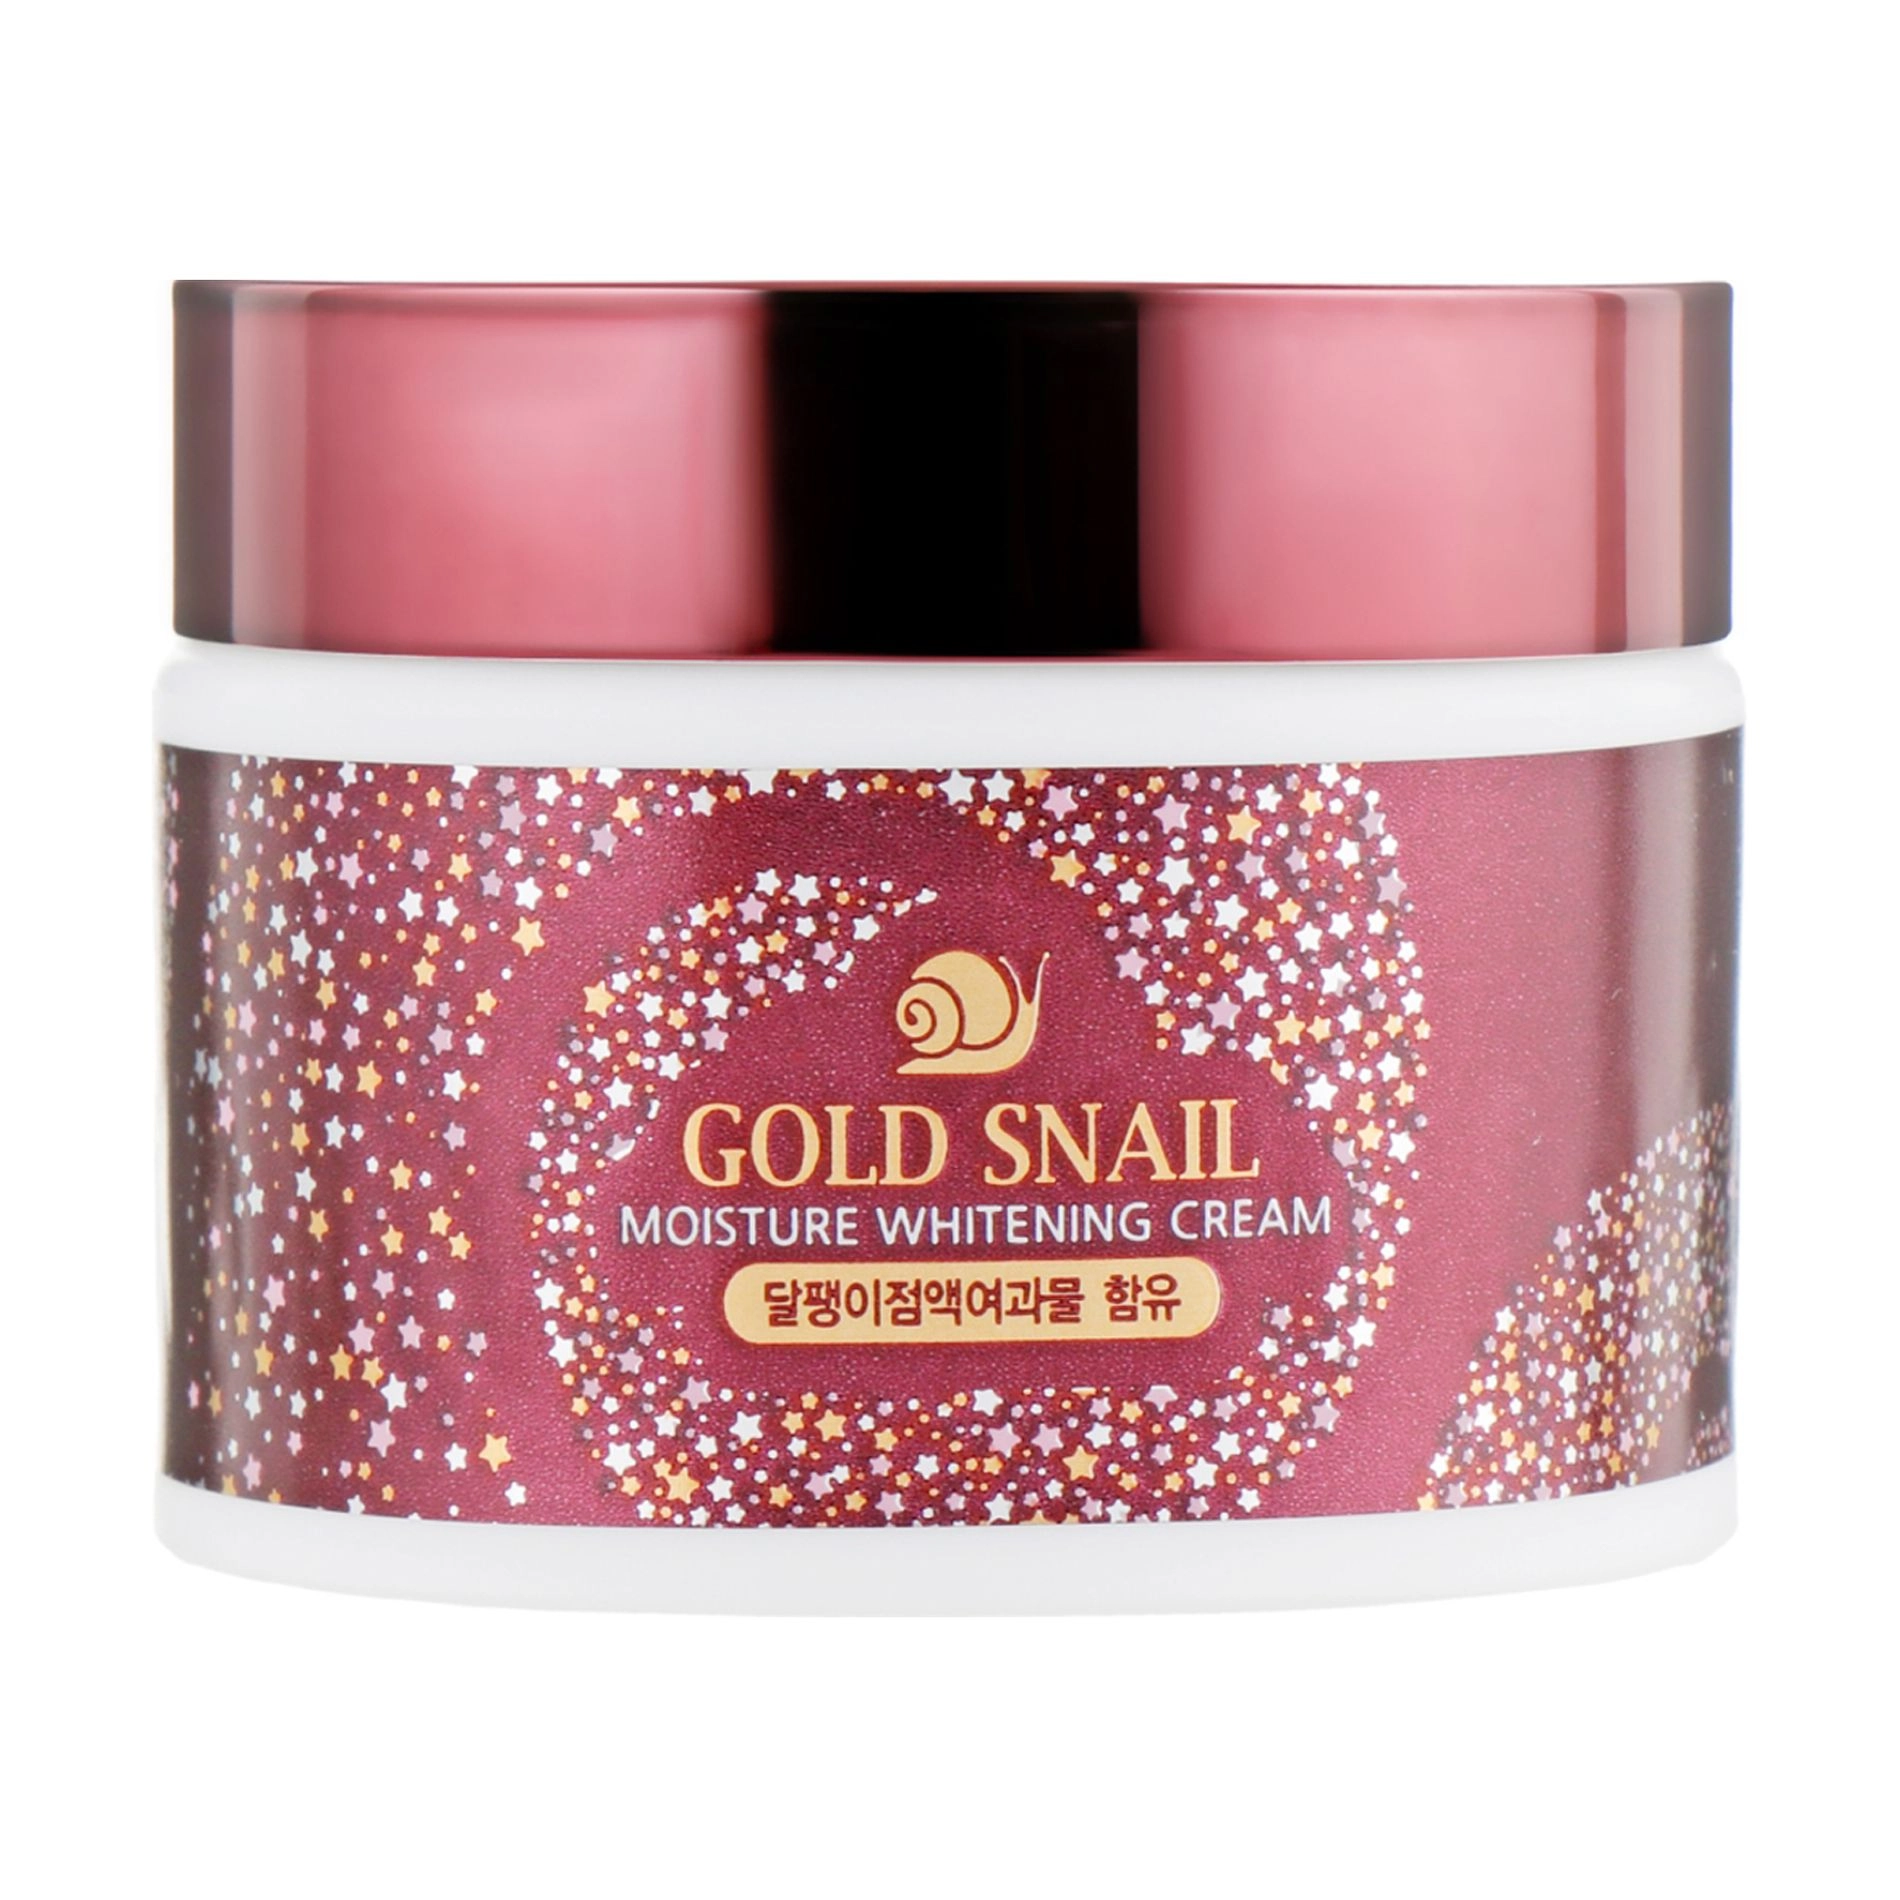 Крем с муцином улитки - Enough Gold Snail Moisture Whitening Cream, 50 мл - фото N5